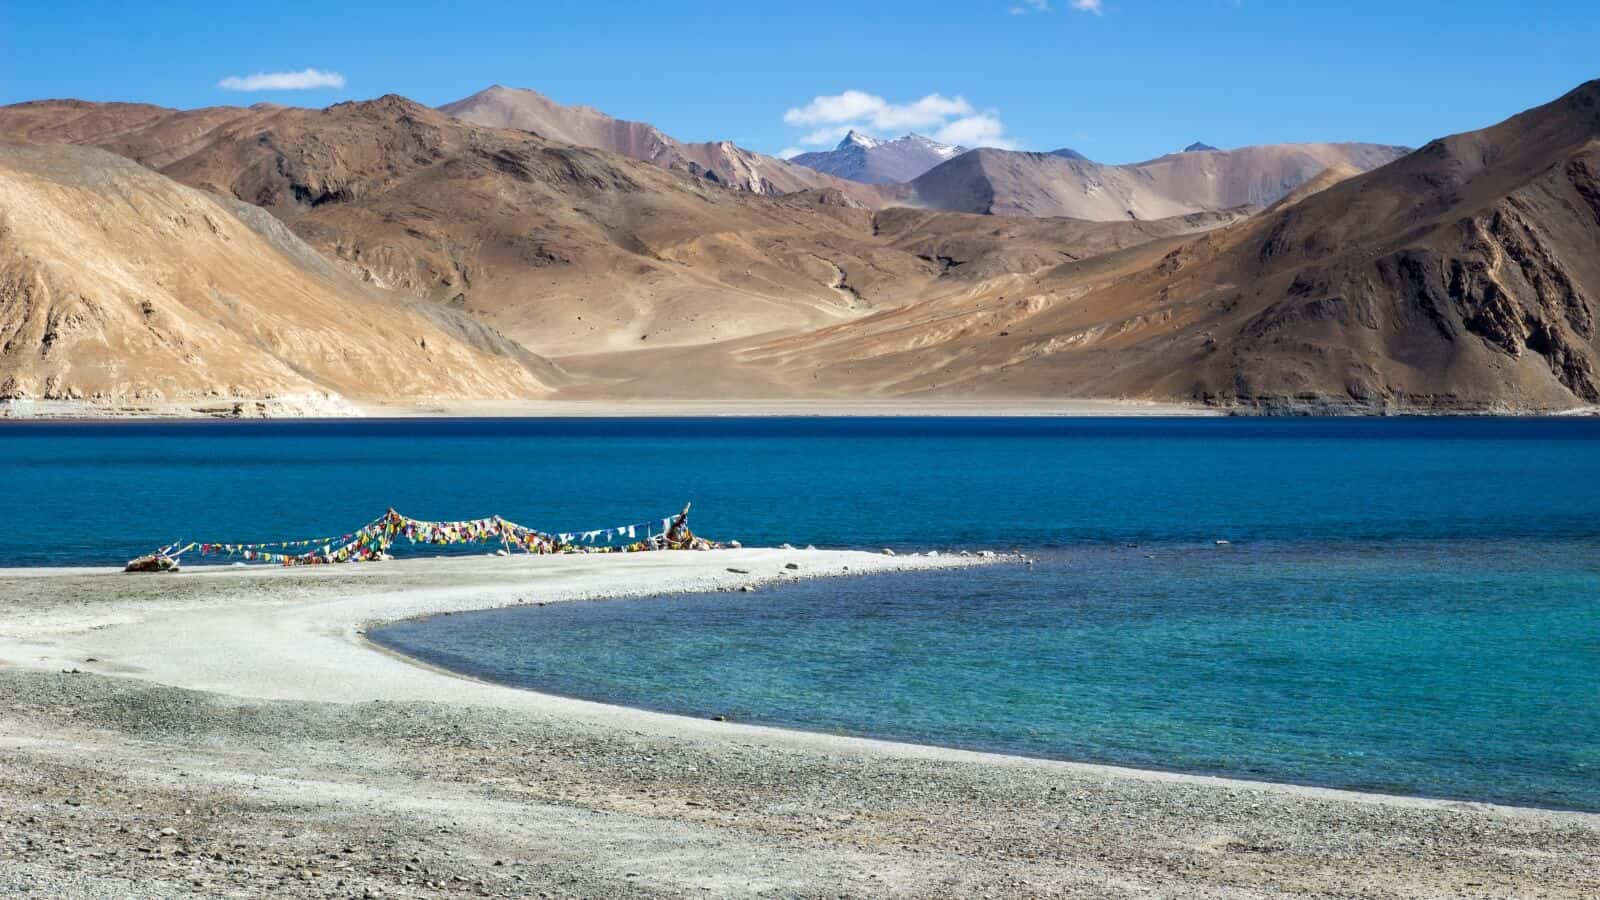 Wonders of Ladakh